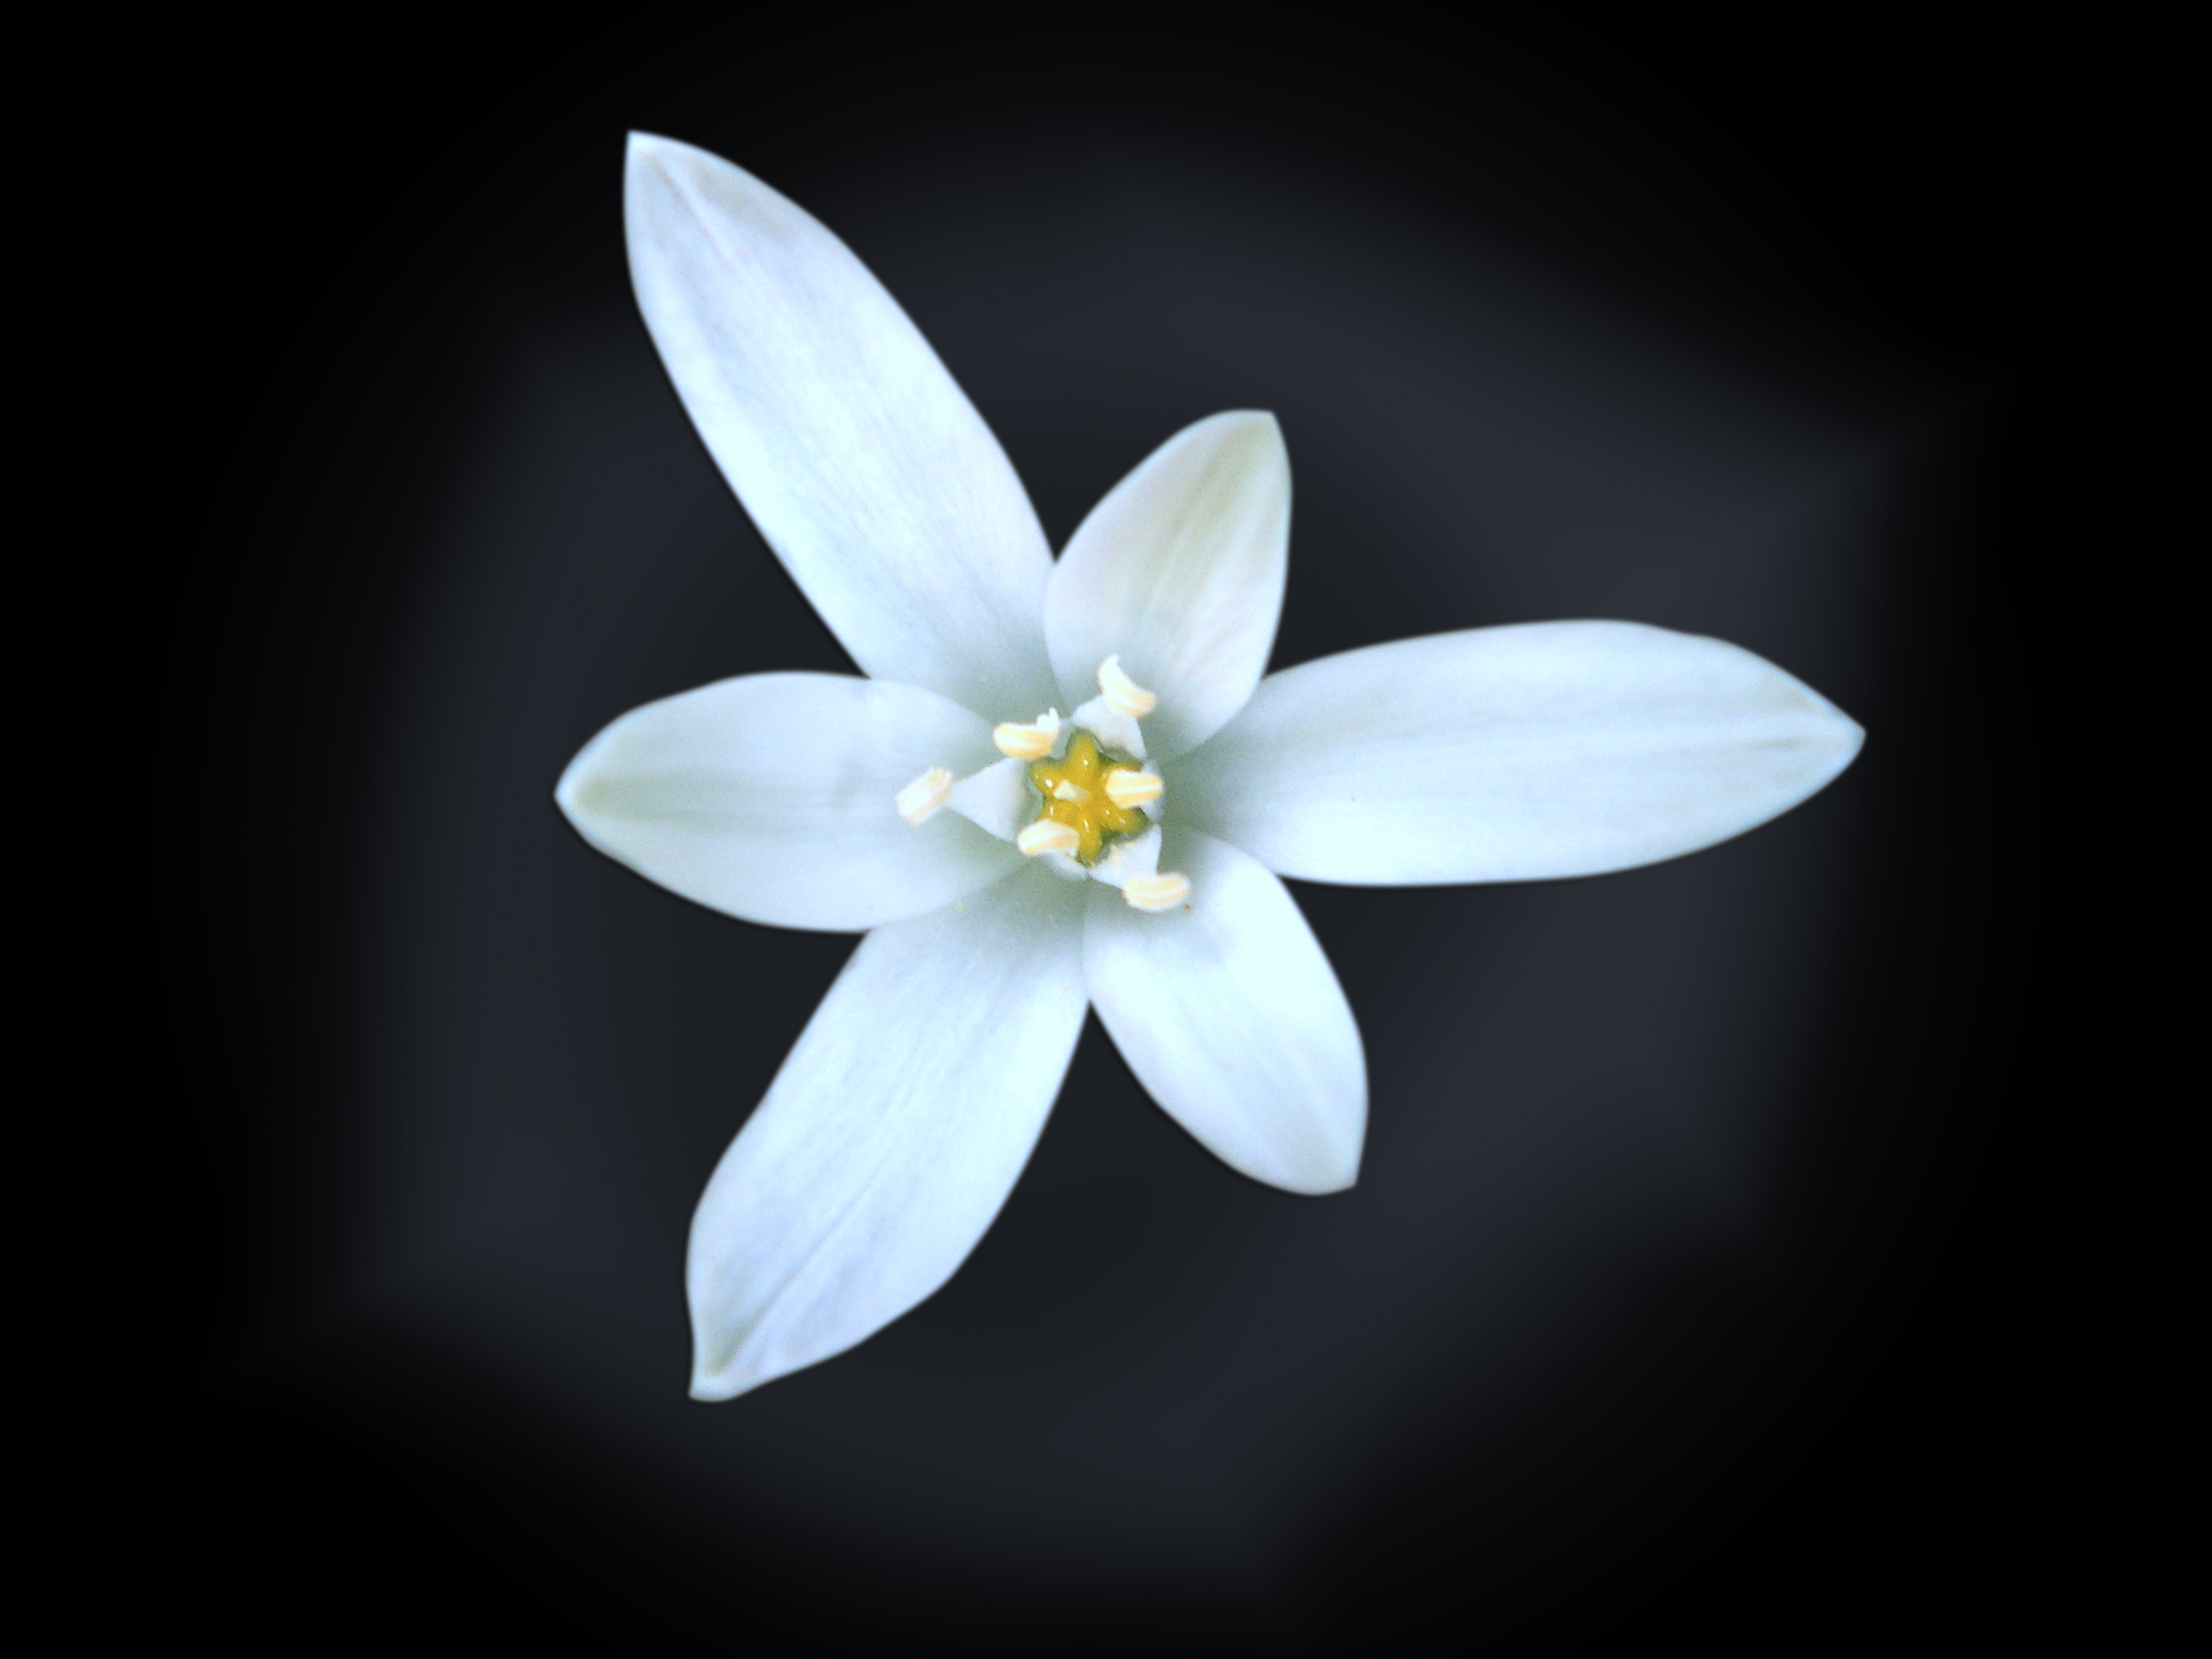 White flowers photo